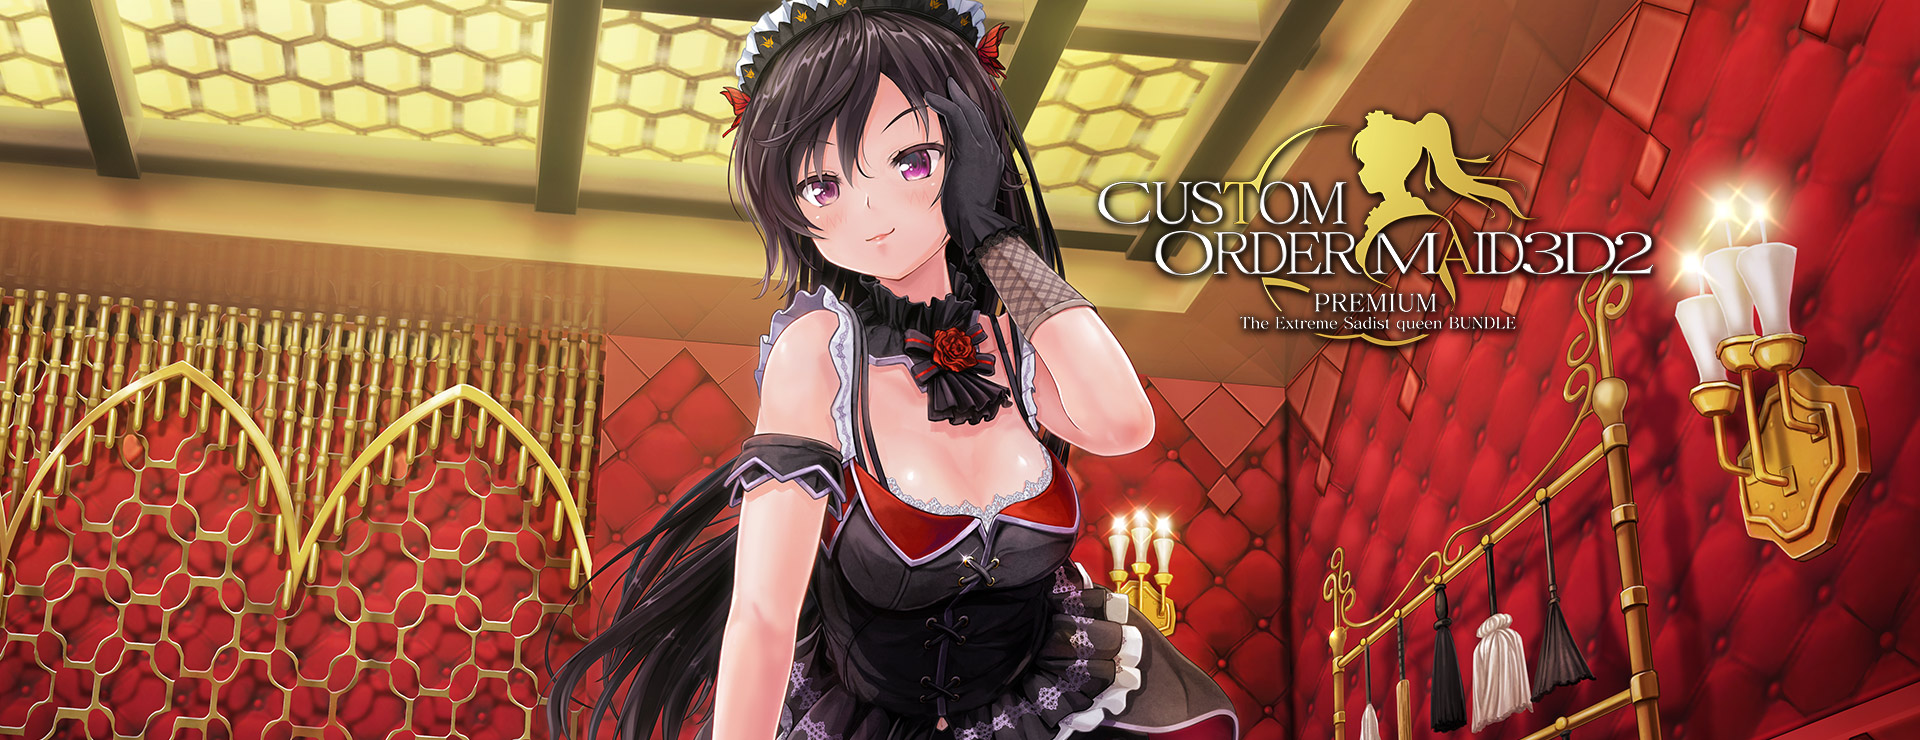 Custom Order Maid 3D2: Extreme Sadist Queen Bundle - Symulacja Gra